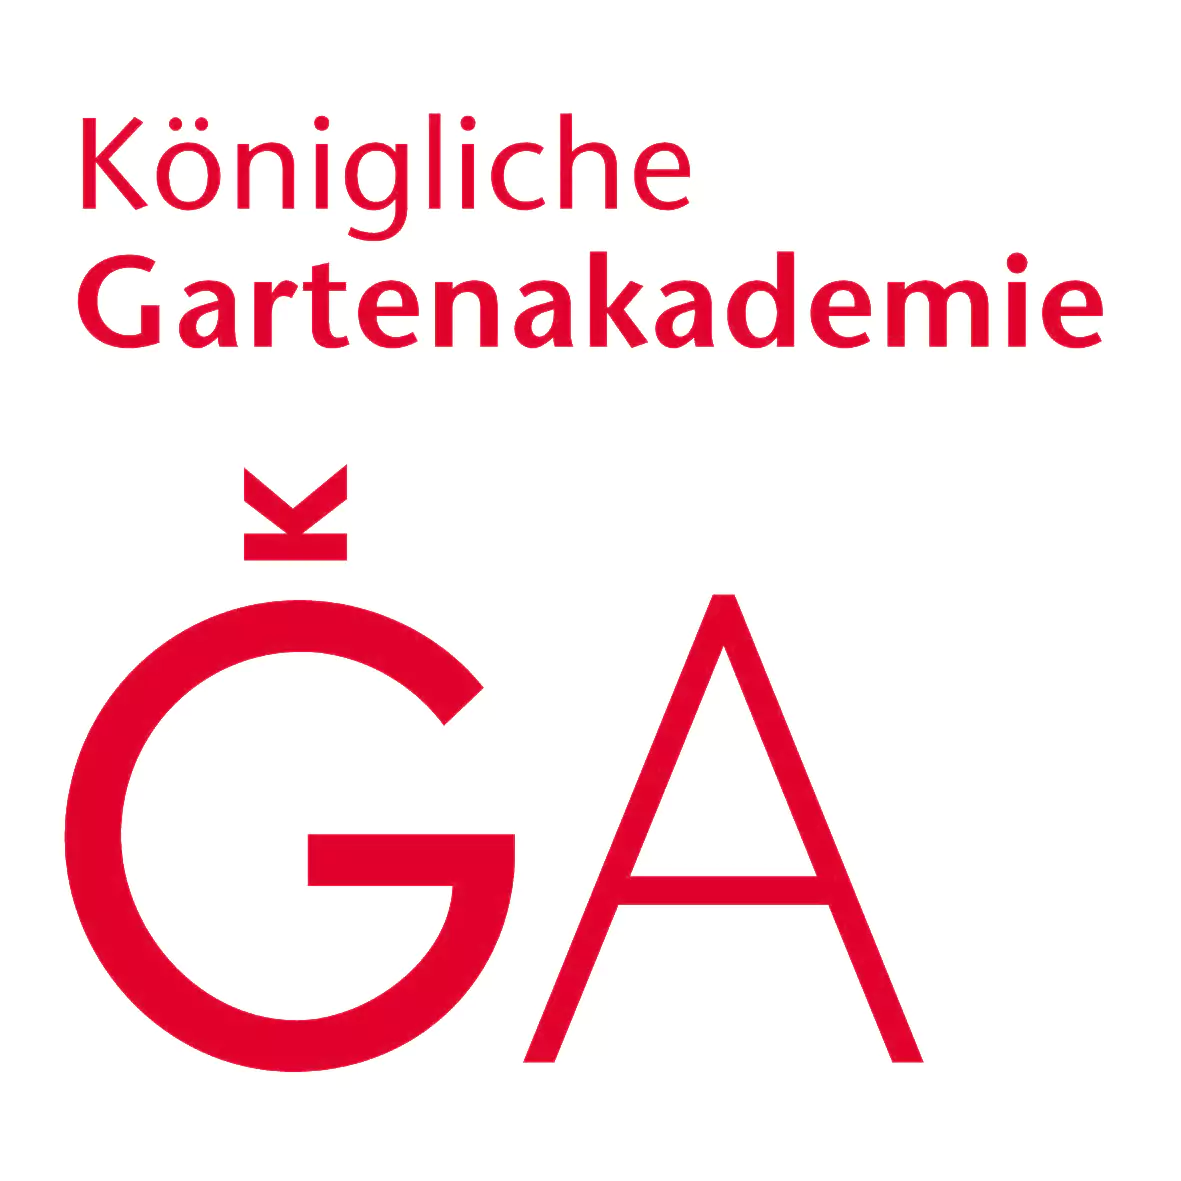 koenigliche-gartenakademie-myshopify-com-logo-6579b1e97bcad